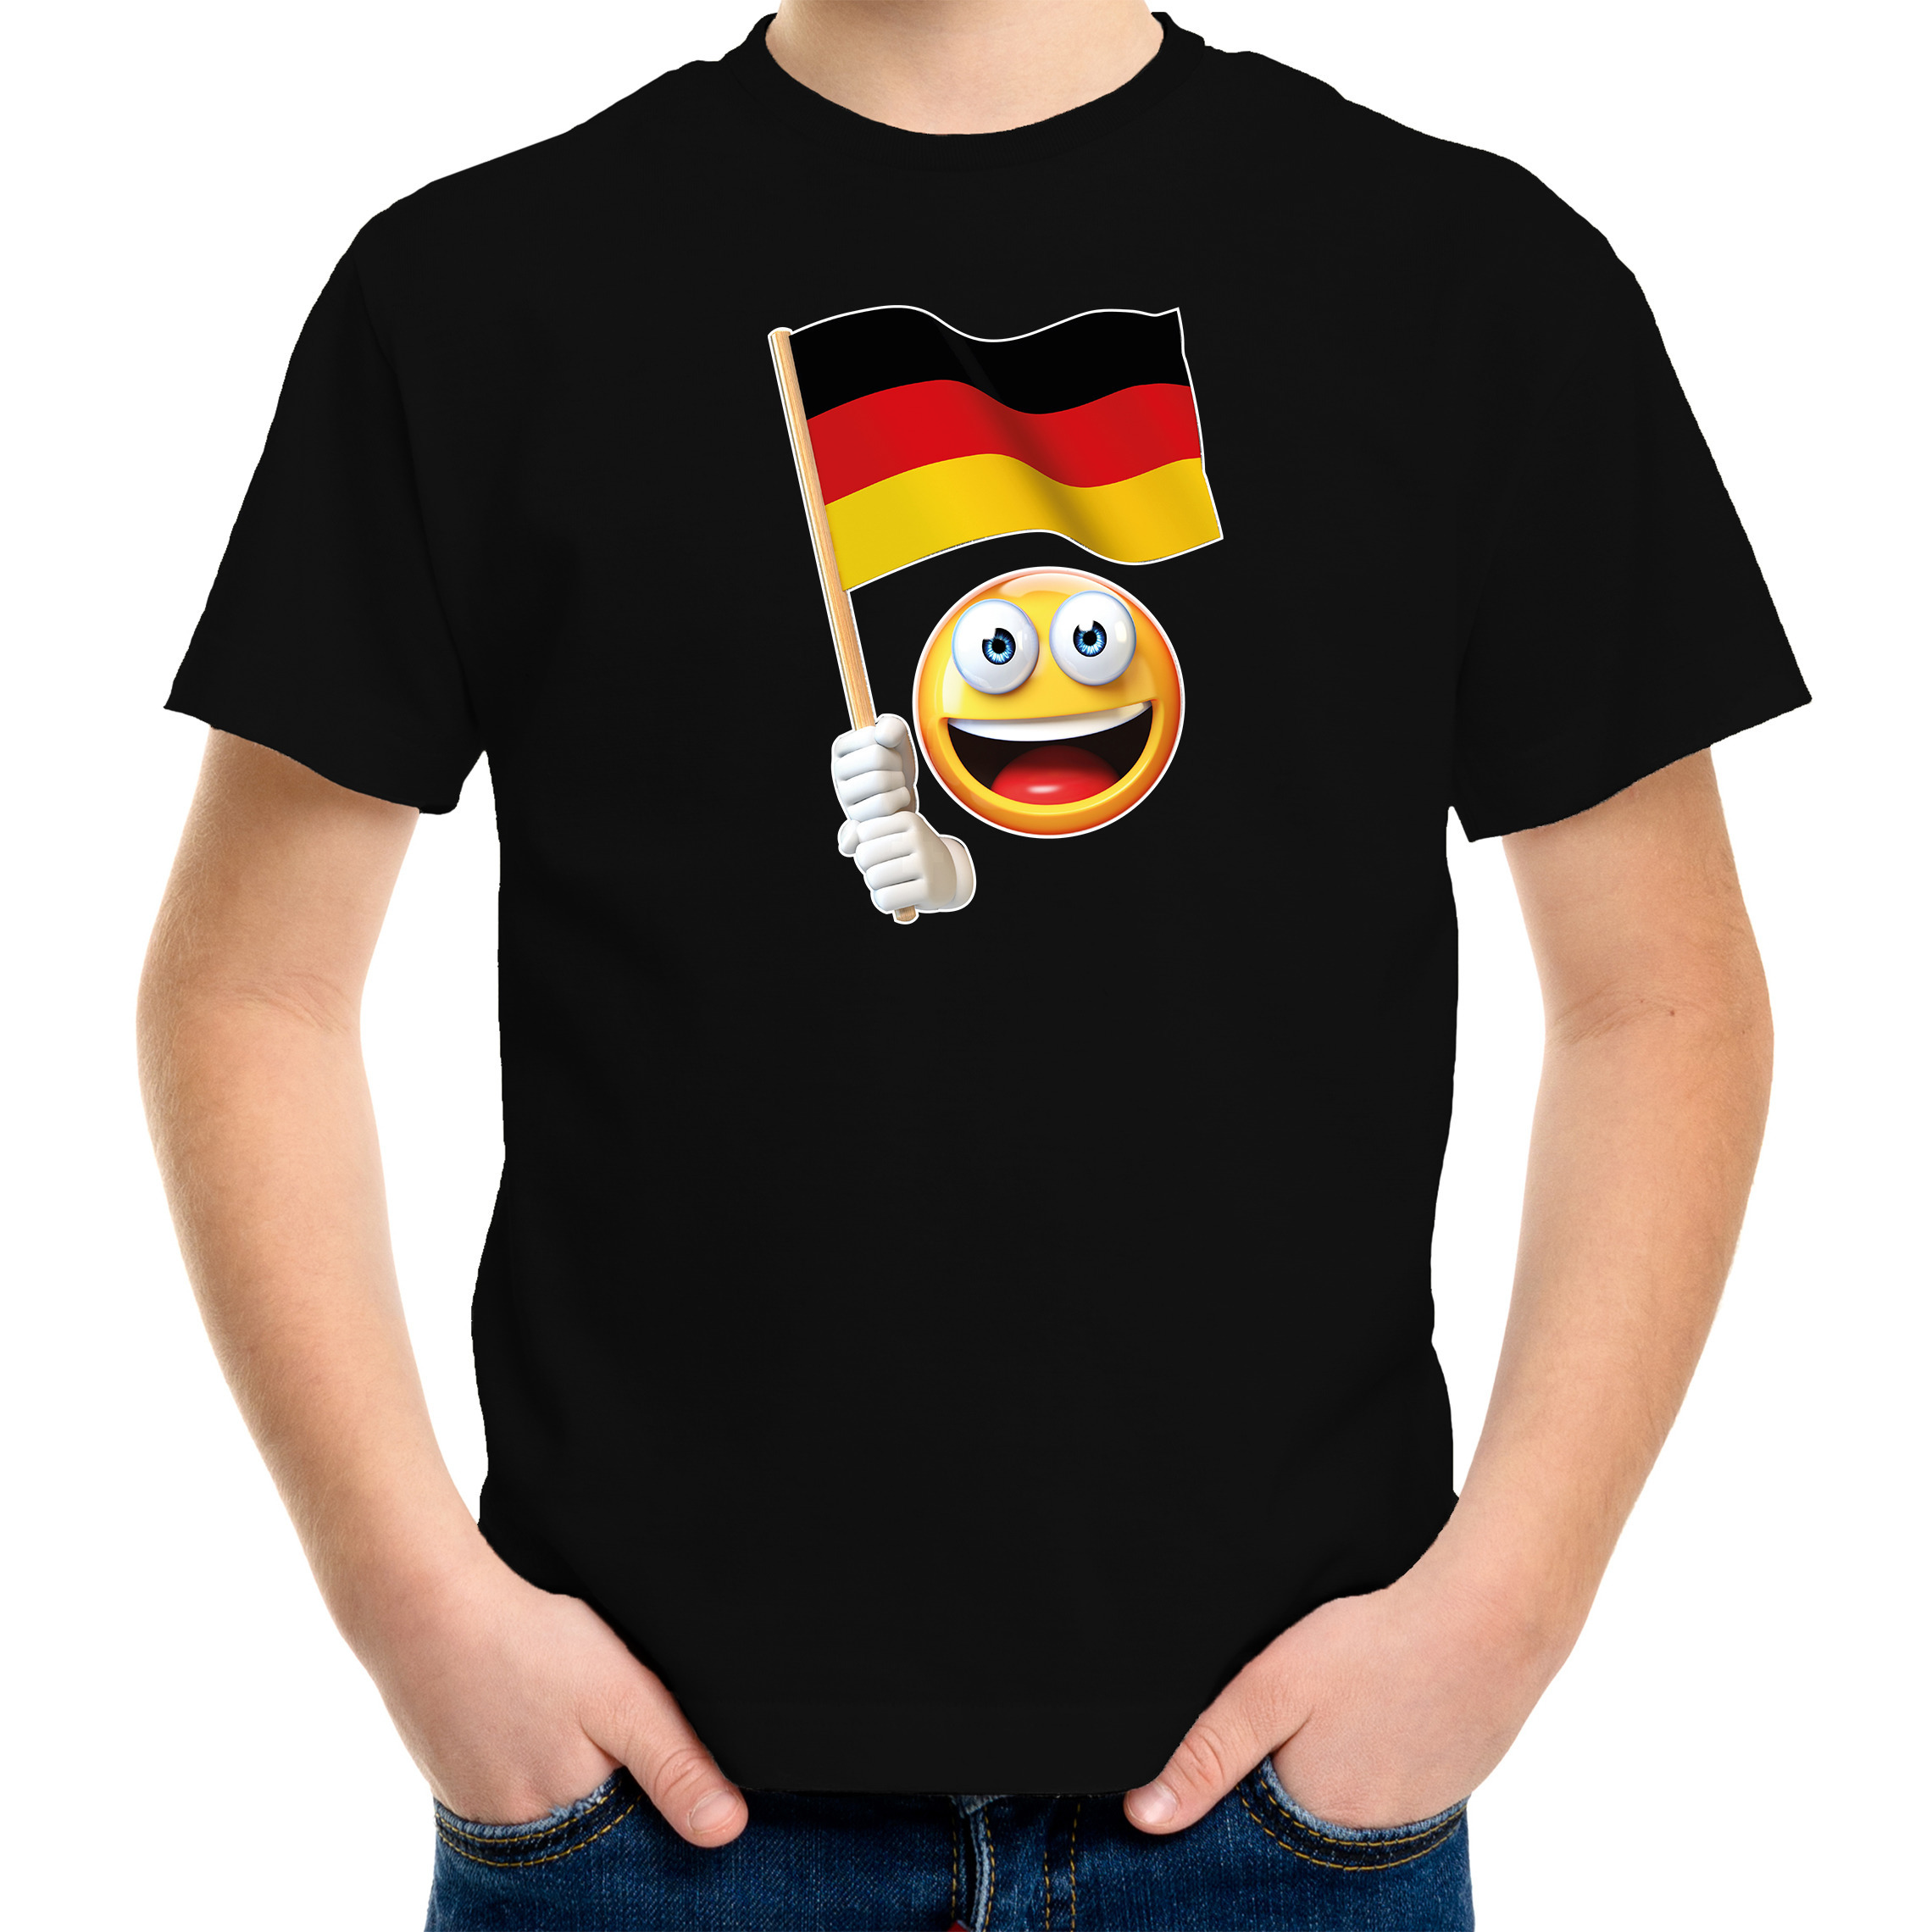 Duitsland supporter - fan emoticon t-shirt zwart voor kinderen